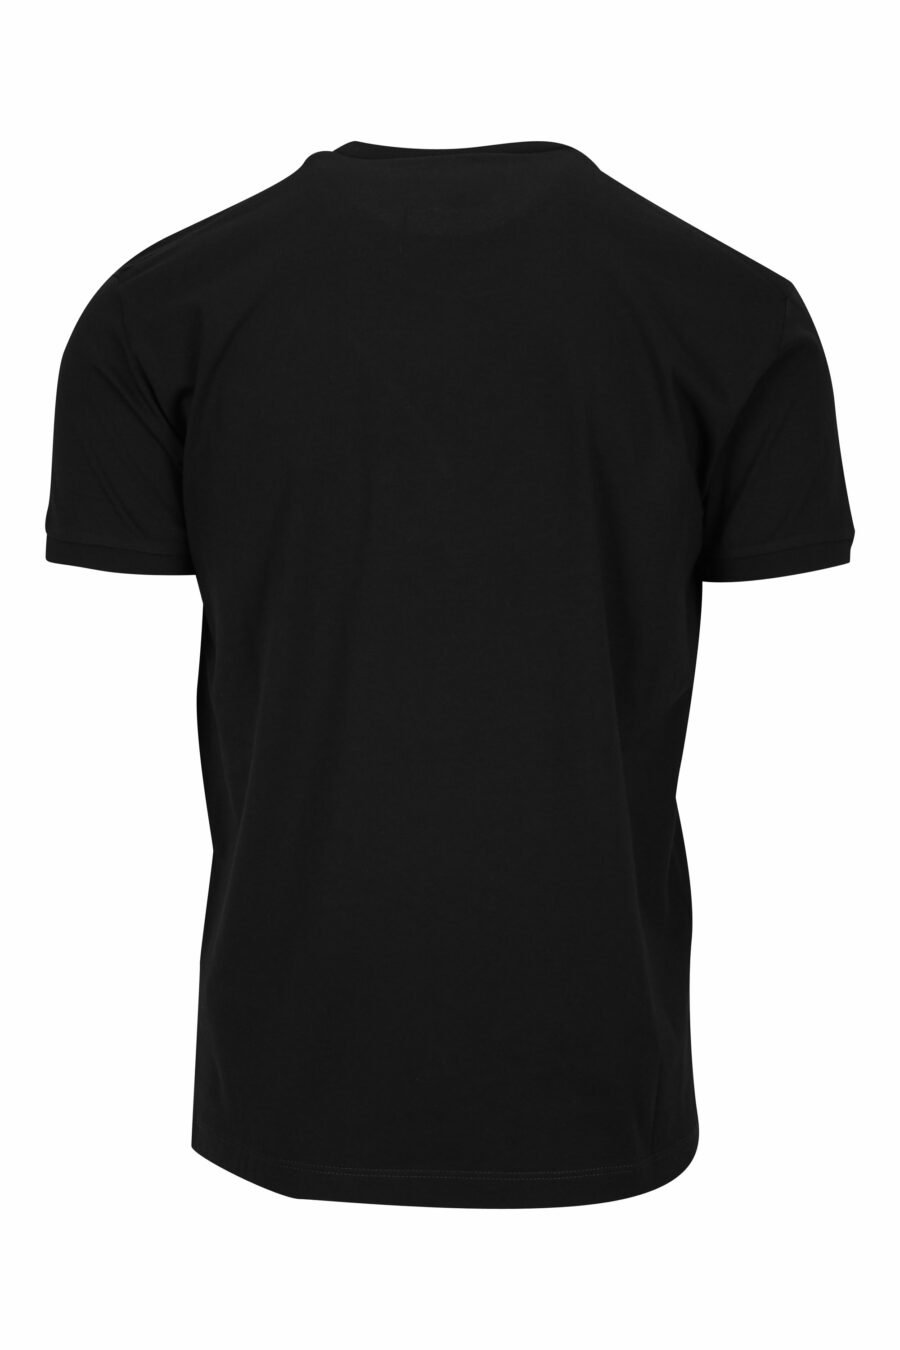 T-shirt noir avec graffiti blanc maxilogo - 8054148572105 1